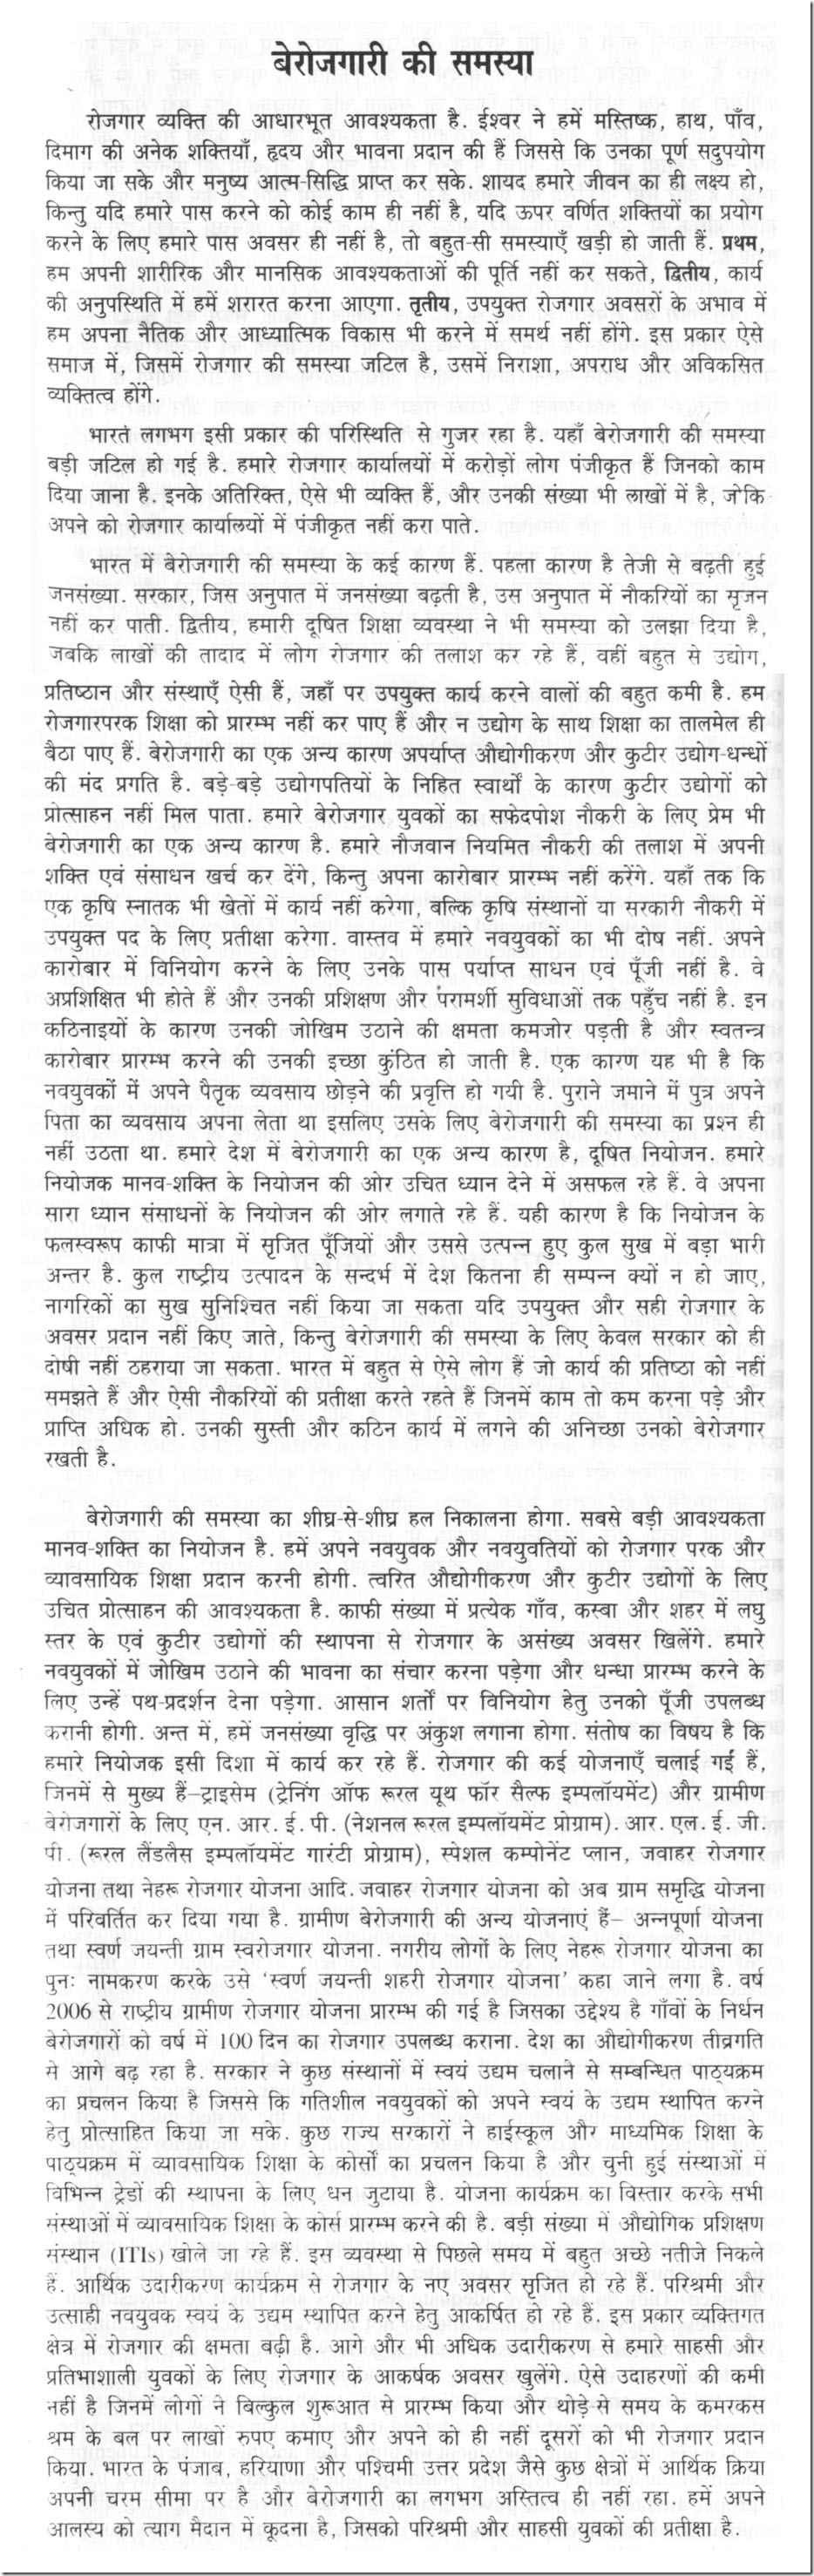 Corruption essay in hindi font